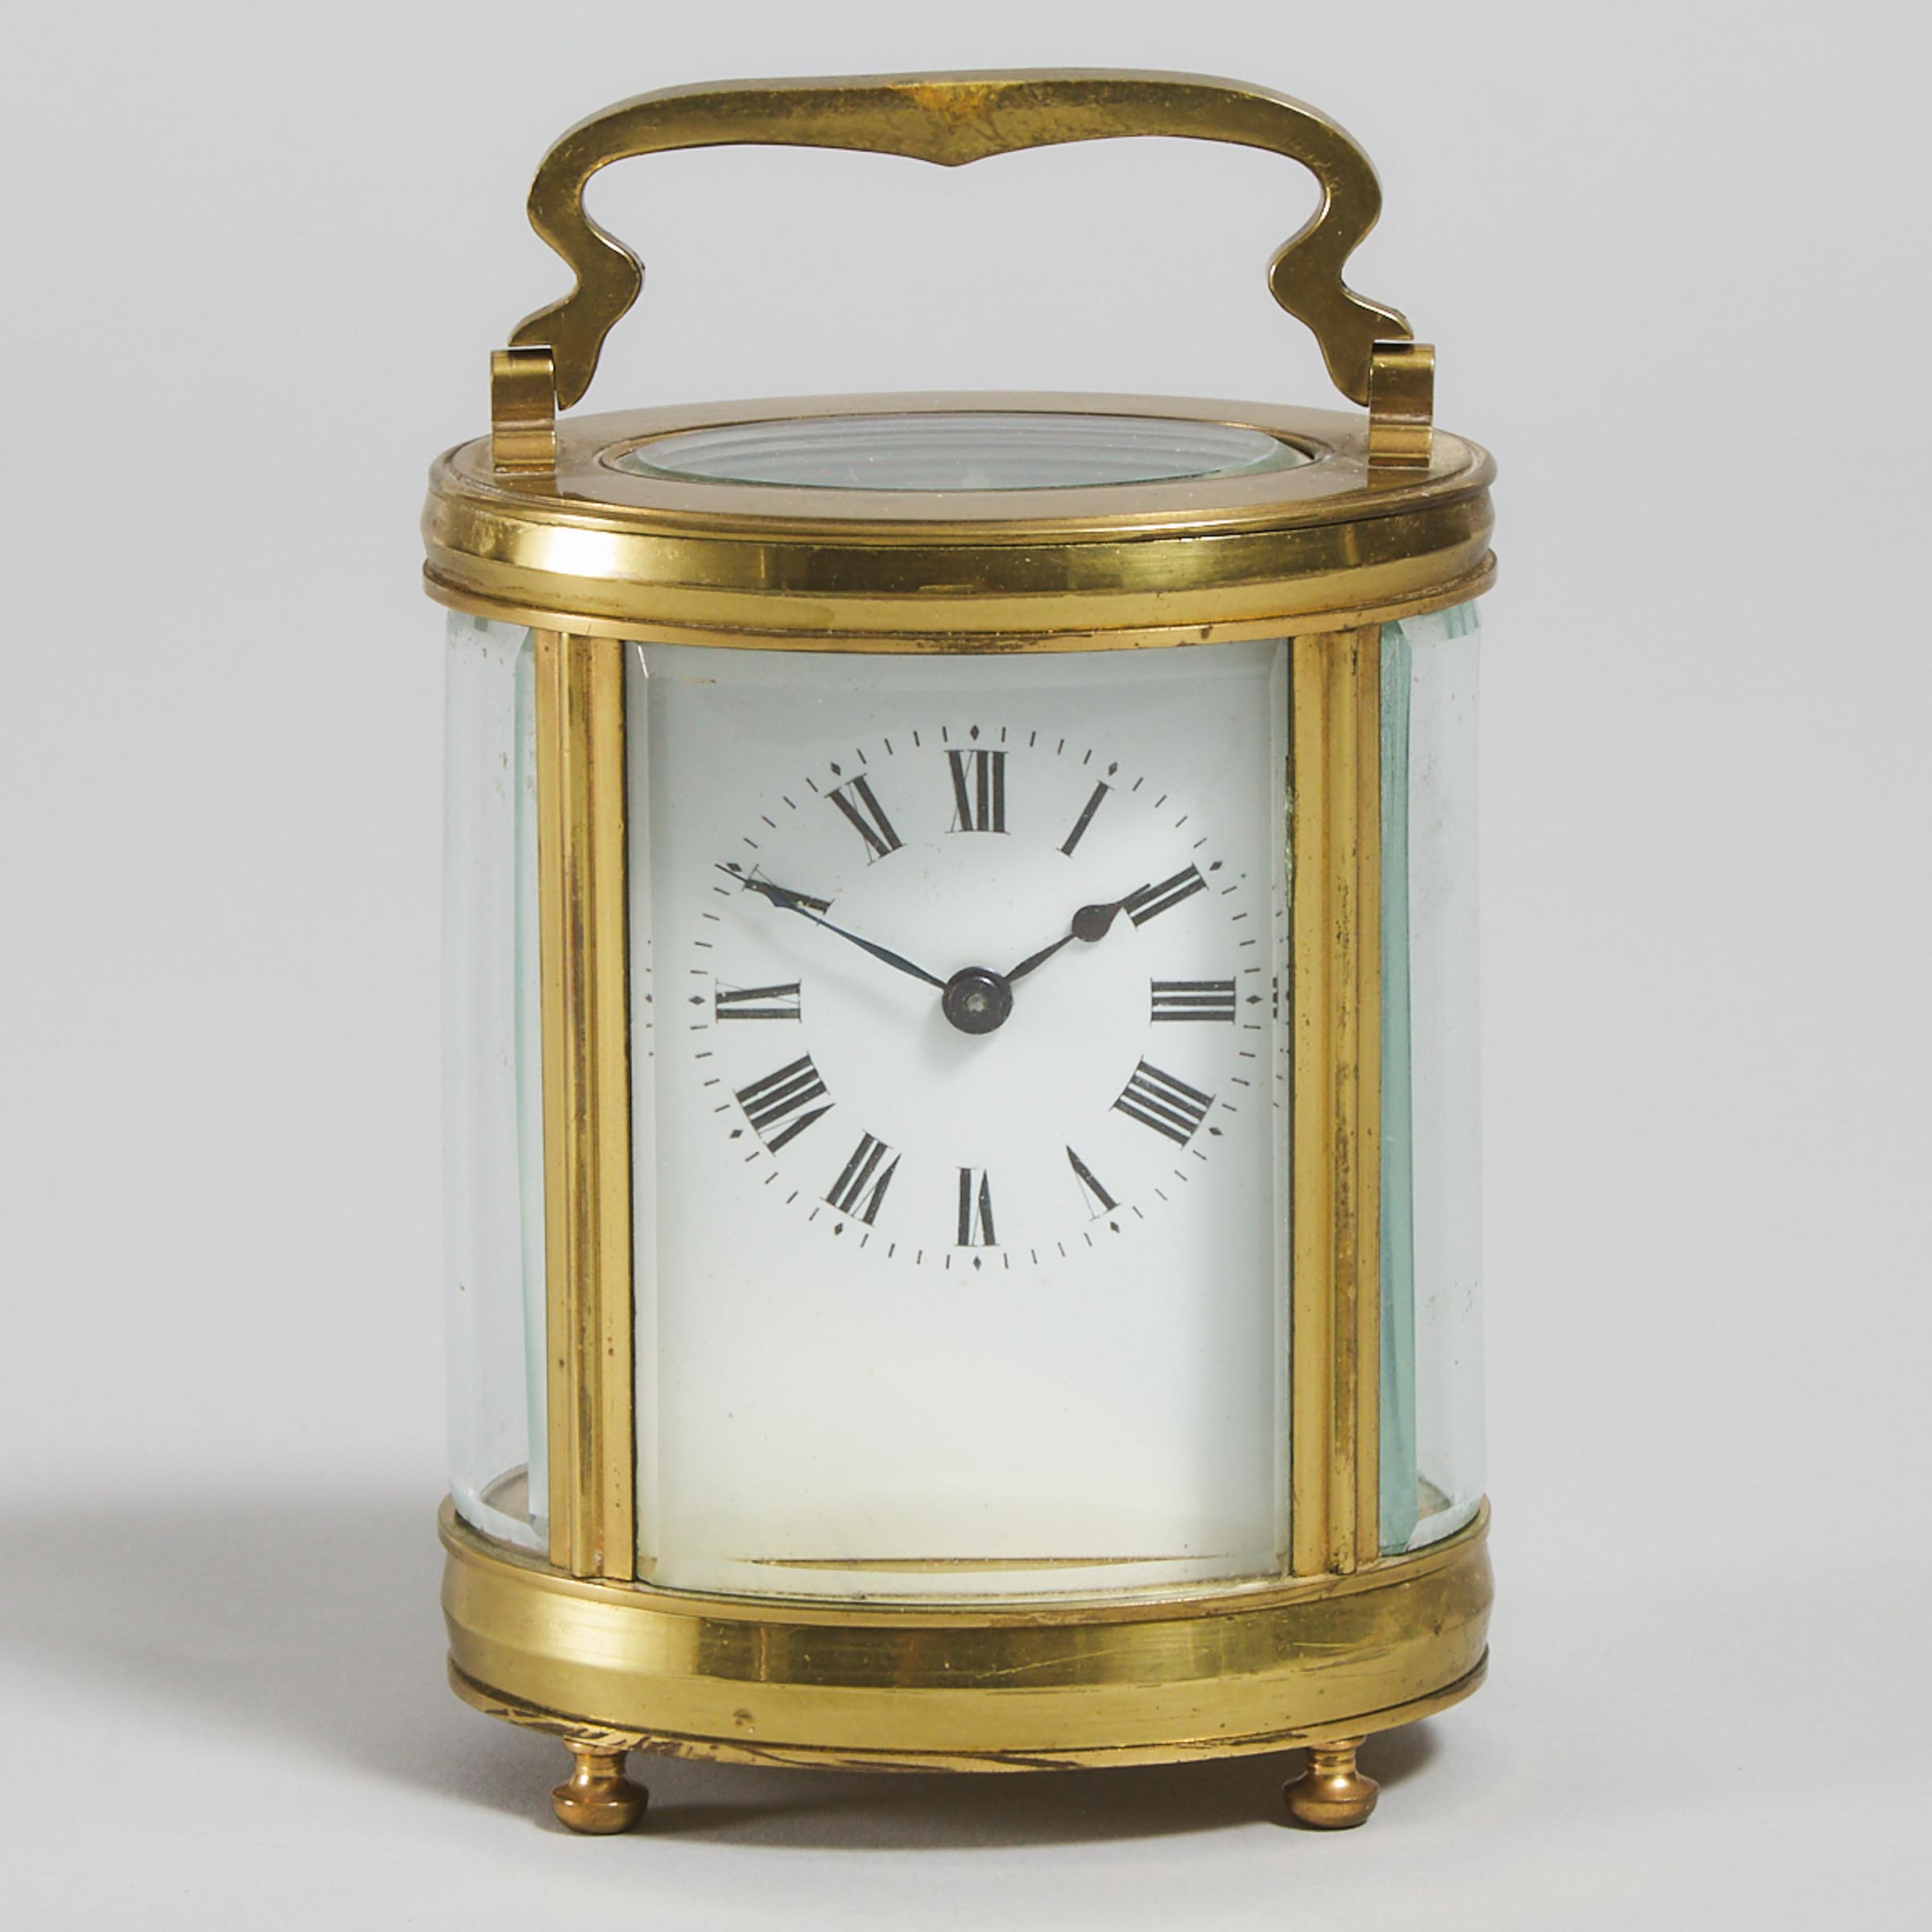 French Oval Carriage Clock, Duverdrey & Bloquel, Paris, c.1900